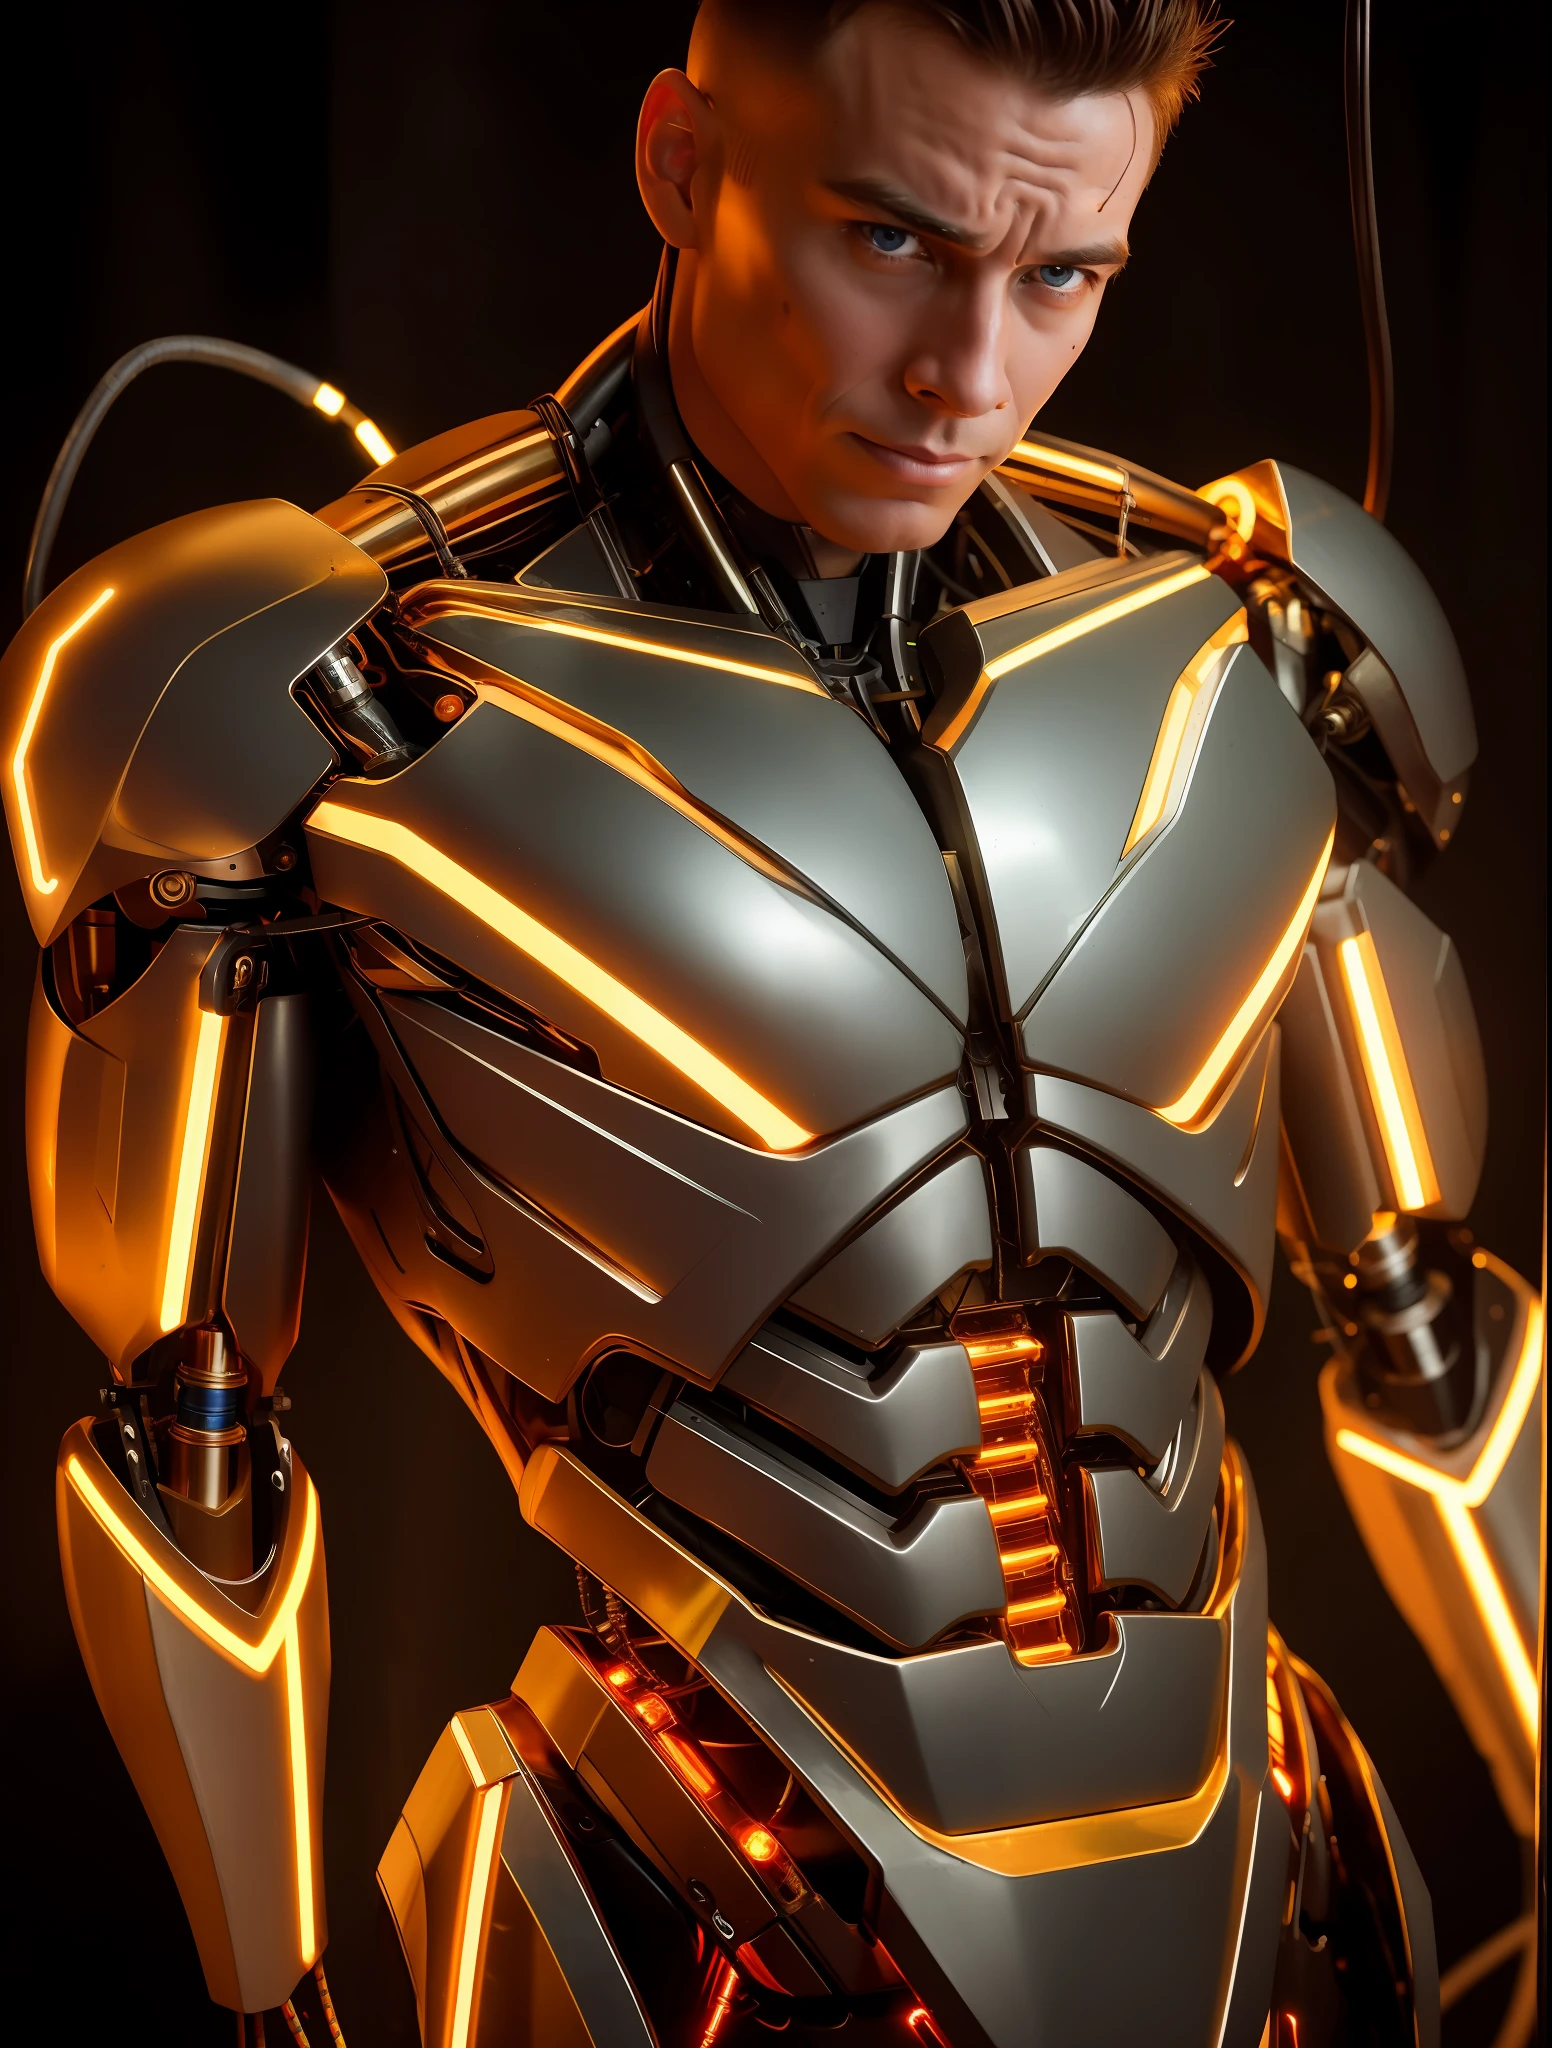 Hombre cyborg musculoso muy atractivo, Cables expuestos, Aceite de oro goteando de cables oxidados, luces, claroscuro de iluminación espectacular,